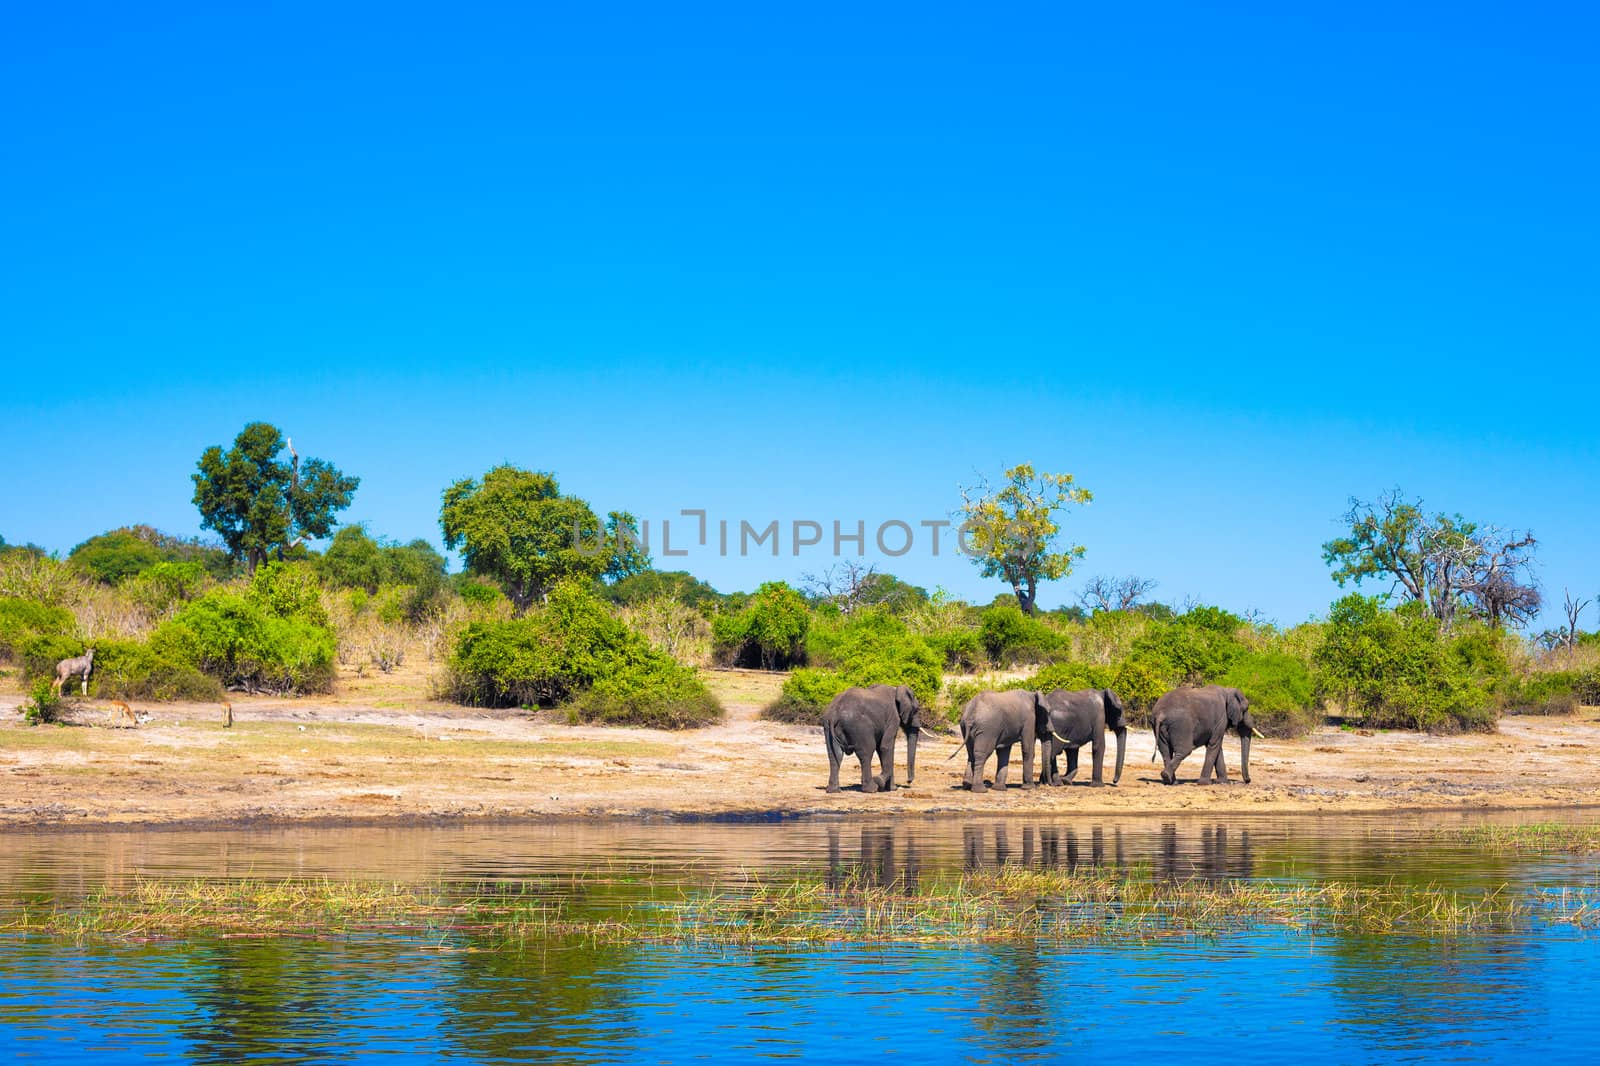 Group of elephants walking by edan